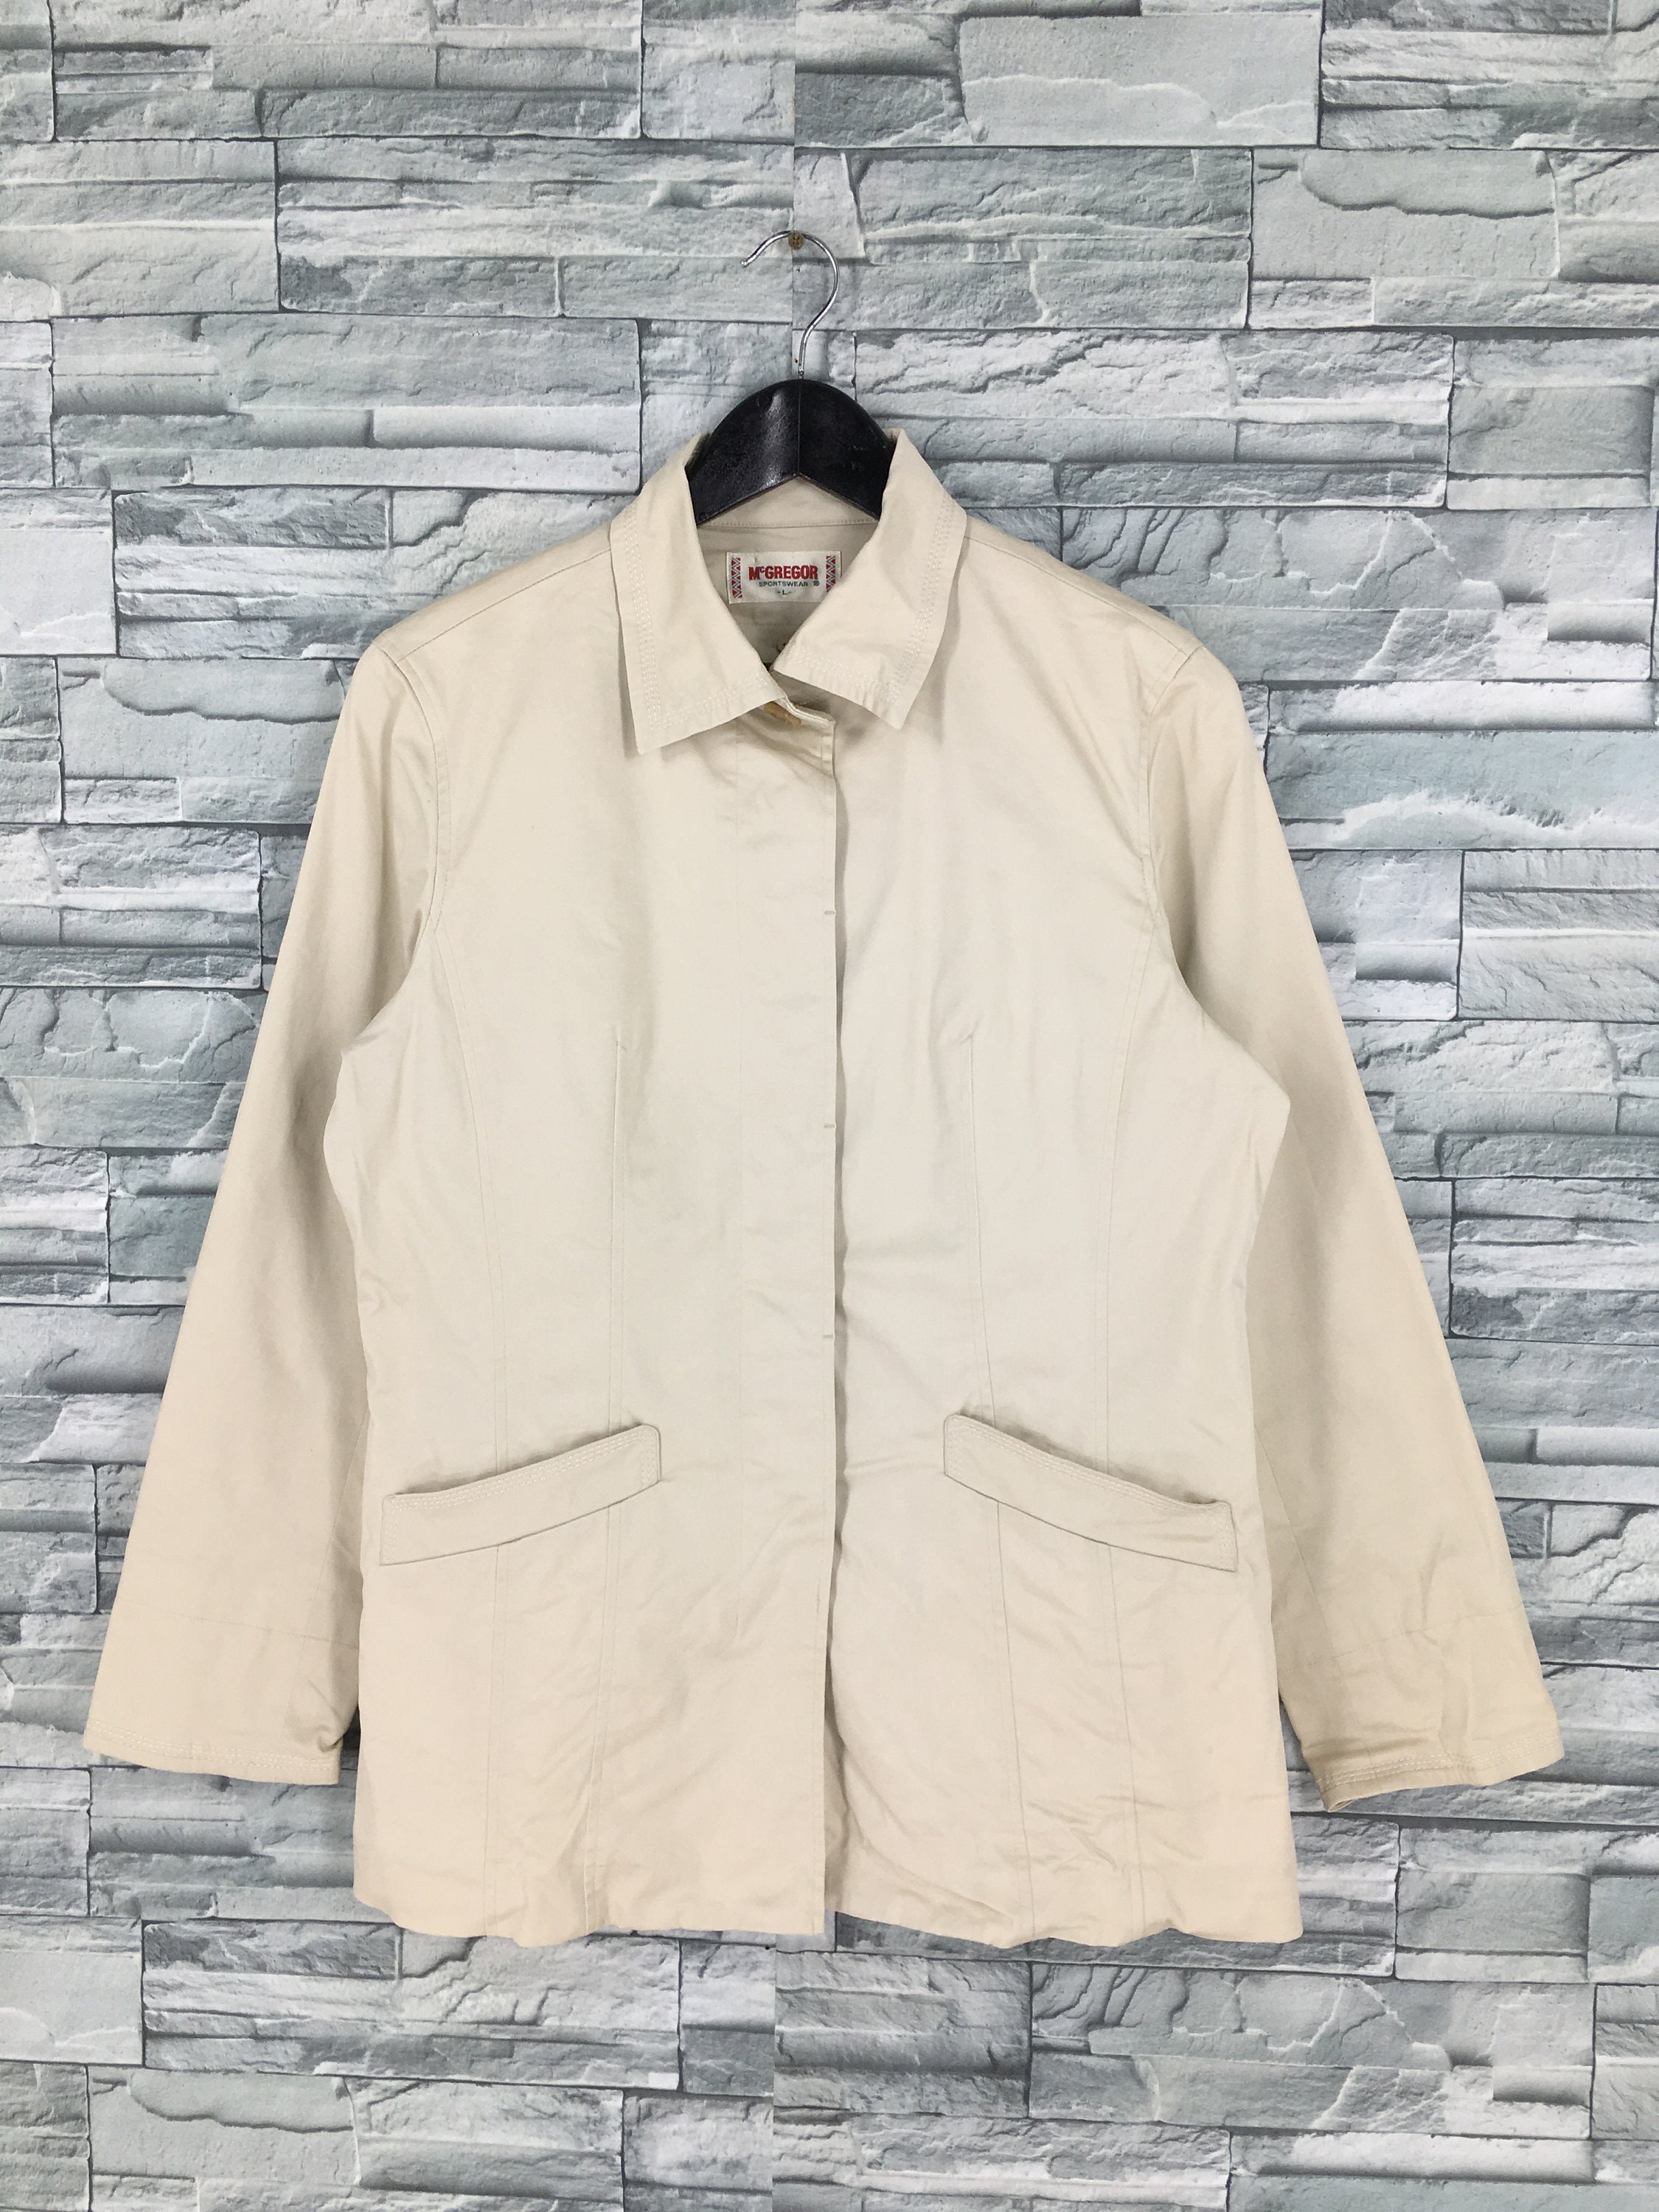 Mcgregor Workers Casual Cotton Jacket Beige Large Vintage | Etsy